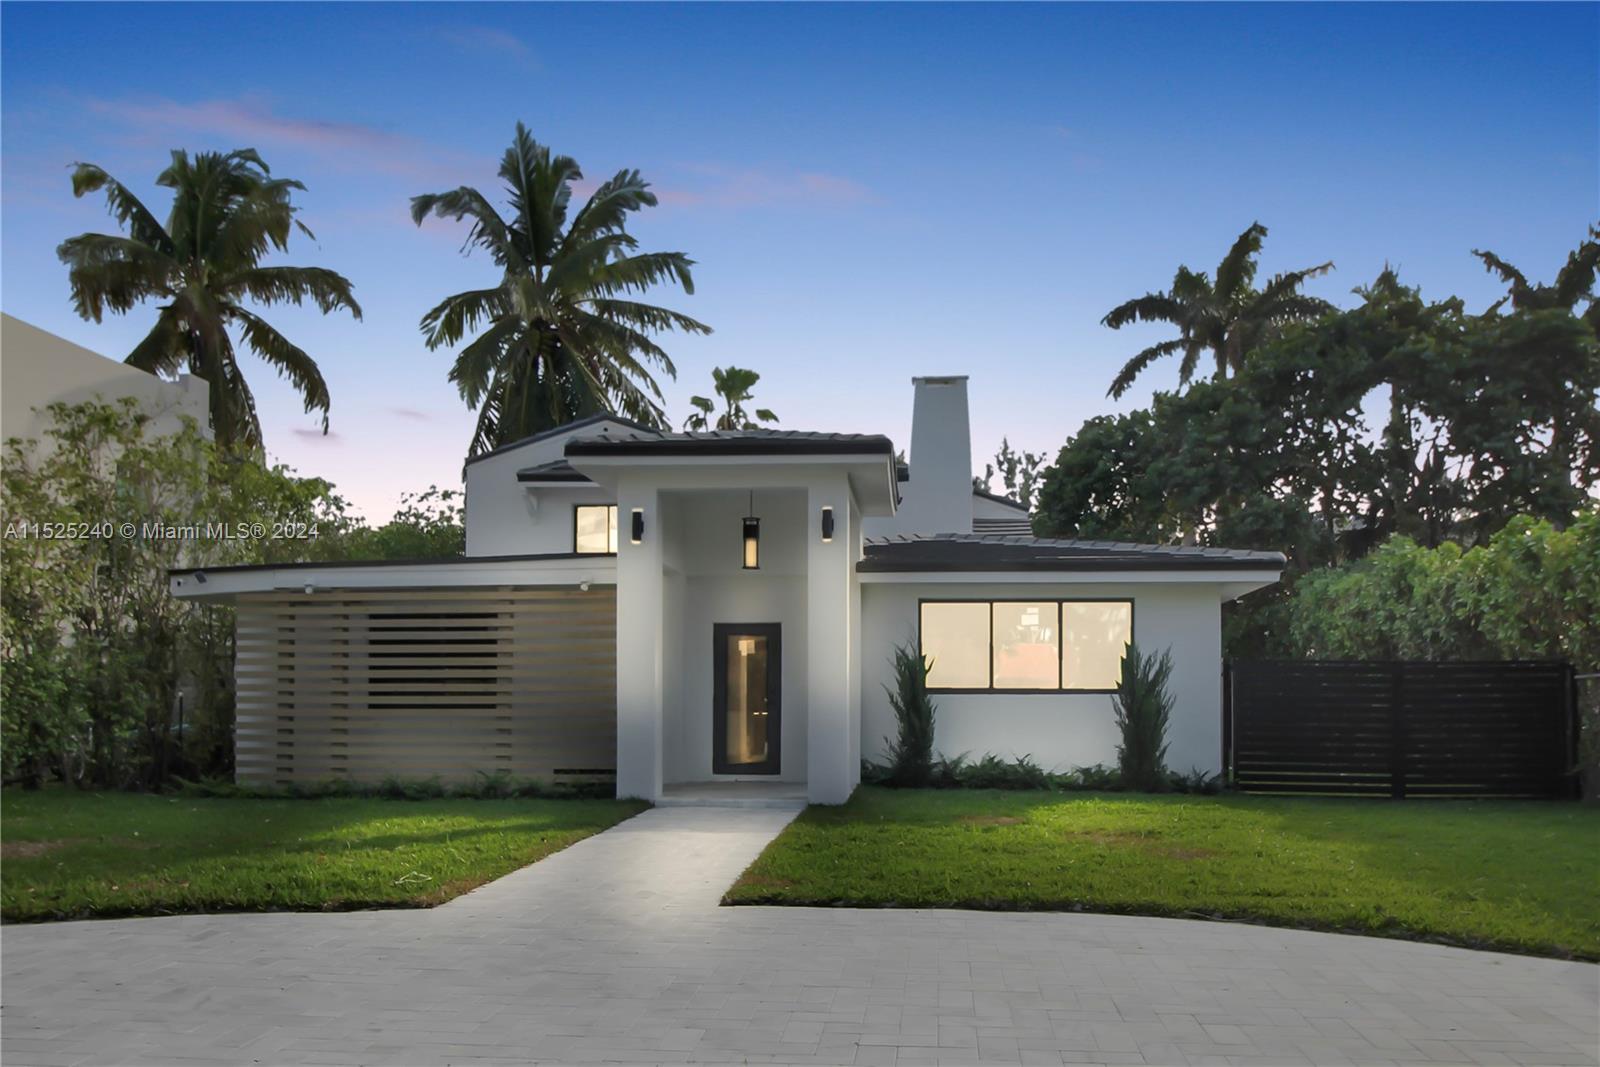 Rental Property at 888 W 47th Street, Miami Beach, Miami-Dade County, Florida - Bedrooms: 4 
Bathrooms: 4  - $15,000 MO.